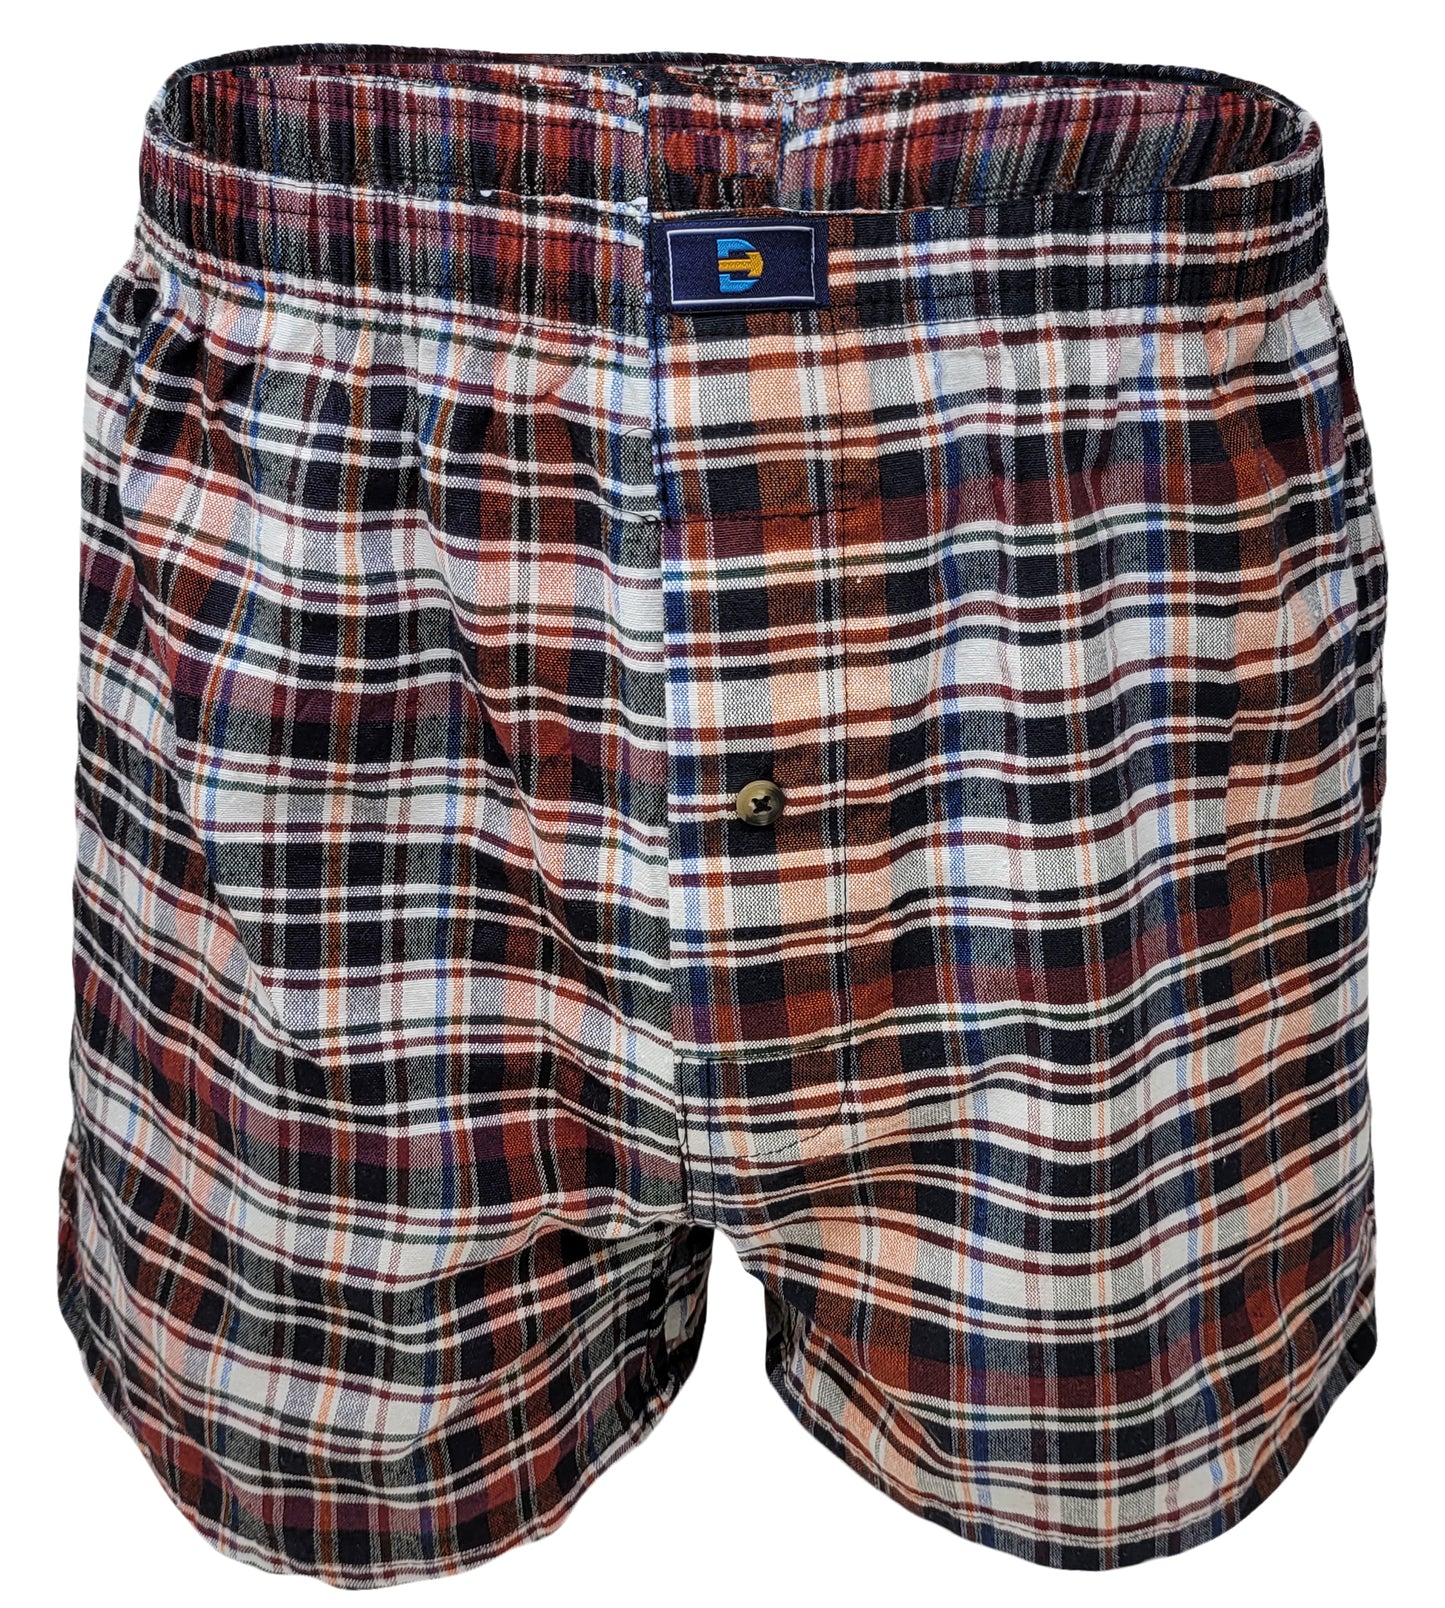 Different Touch Men's Classic Design Plaid Woven Boxer Shorts Underwear (6 Pack)